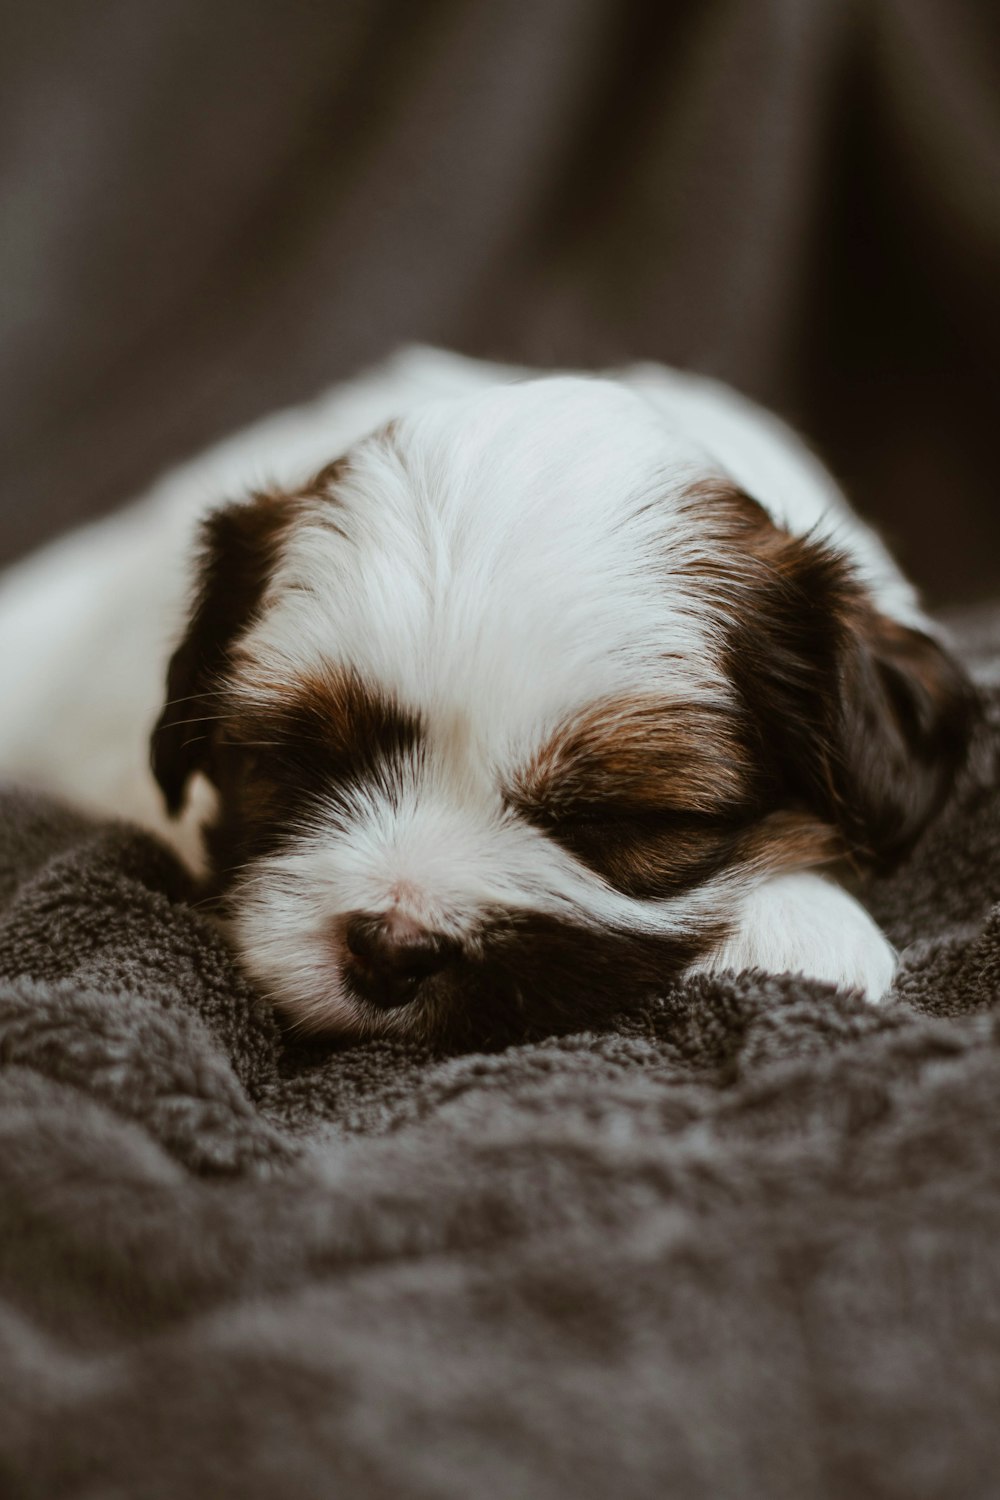 puppy sleeping on gray textile